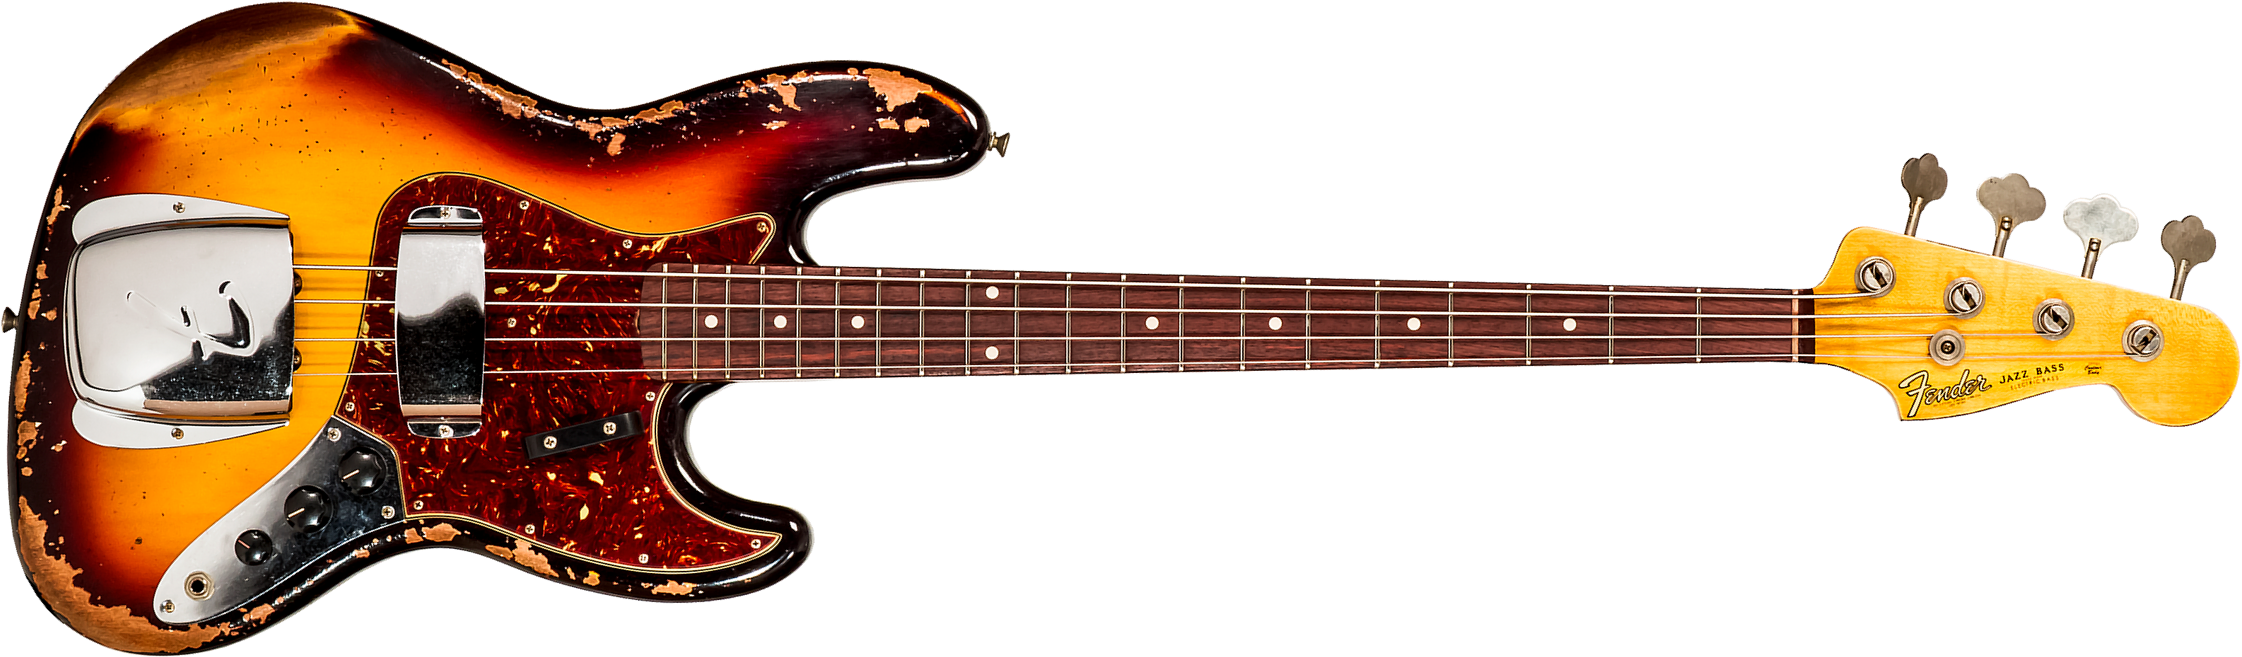 Fender Custom Shop Jazz Bass 1961 Rw #cz572155 - Heavy Relic 3-color Sunburst - Solid body elektrische bas - Main picture